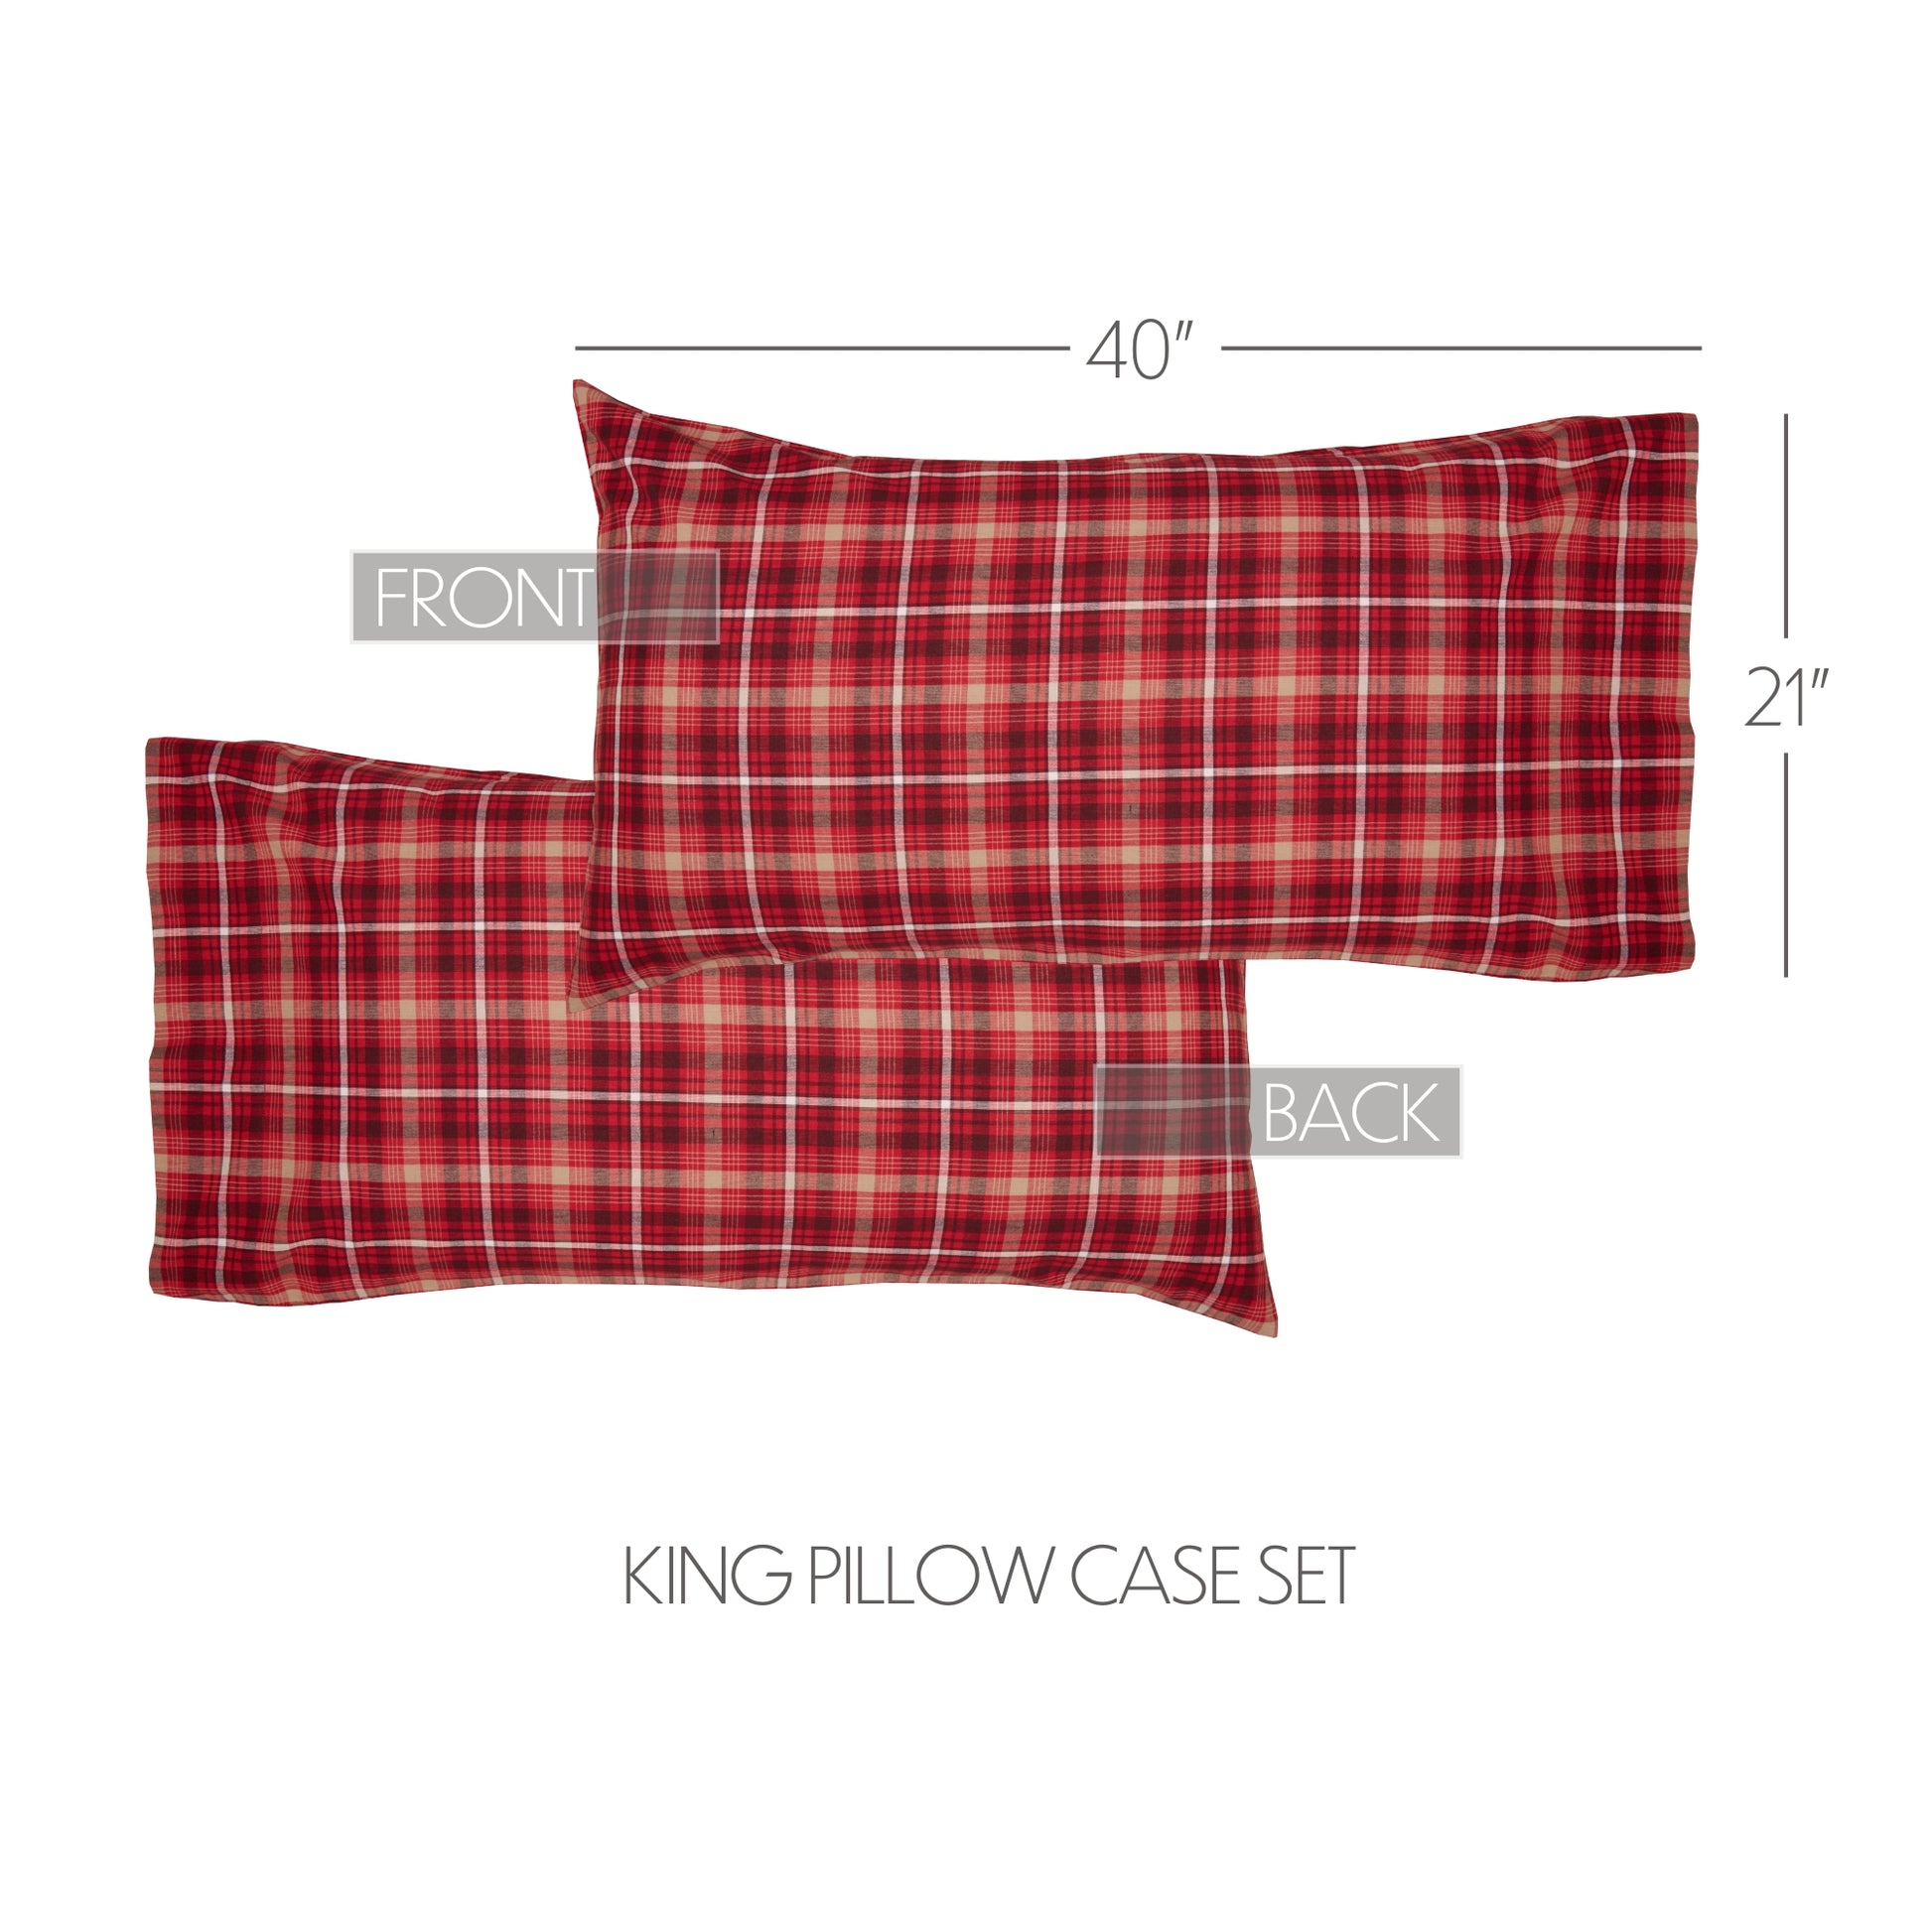 56649-Braxton-King-Pillow-Case-Set-of-2-21x40-image-1